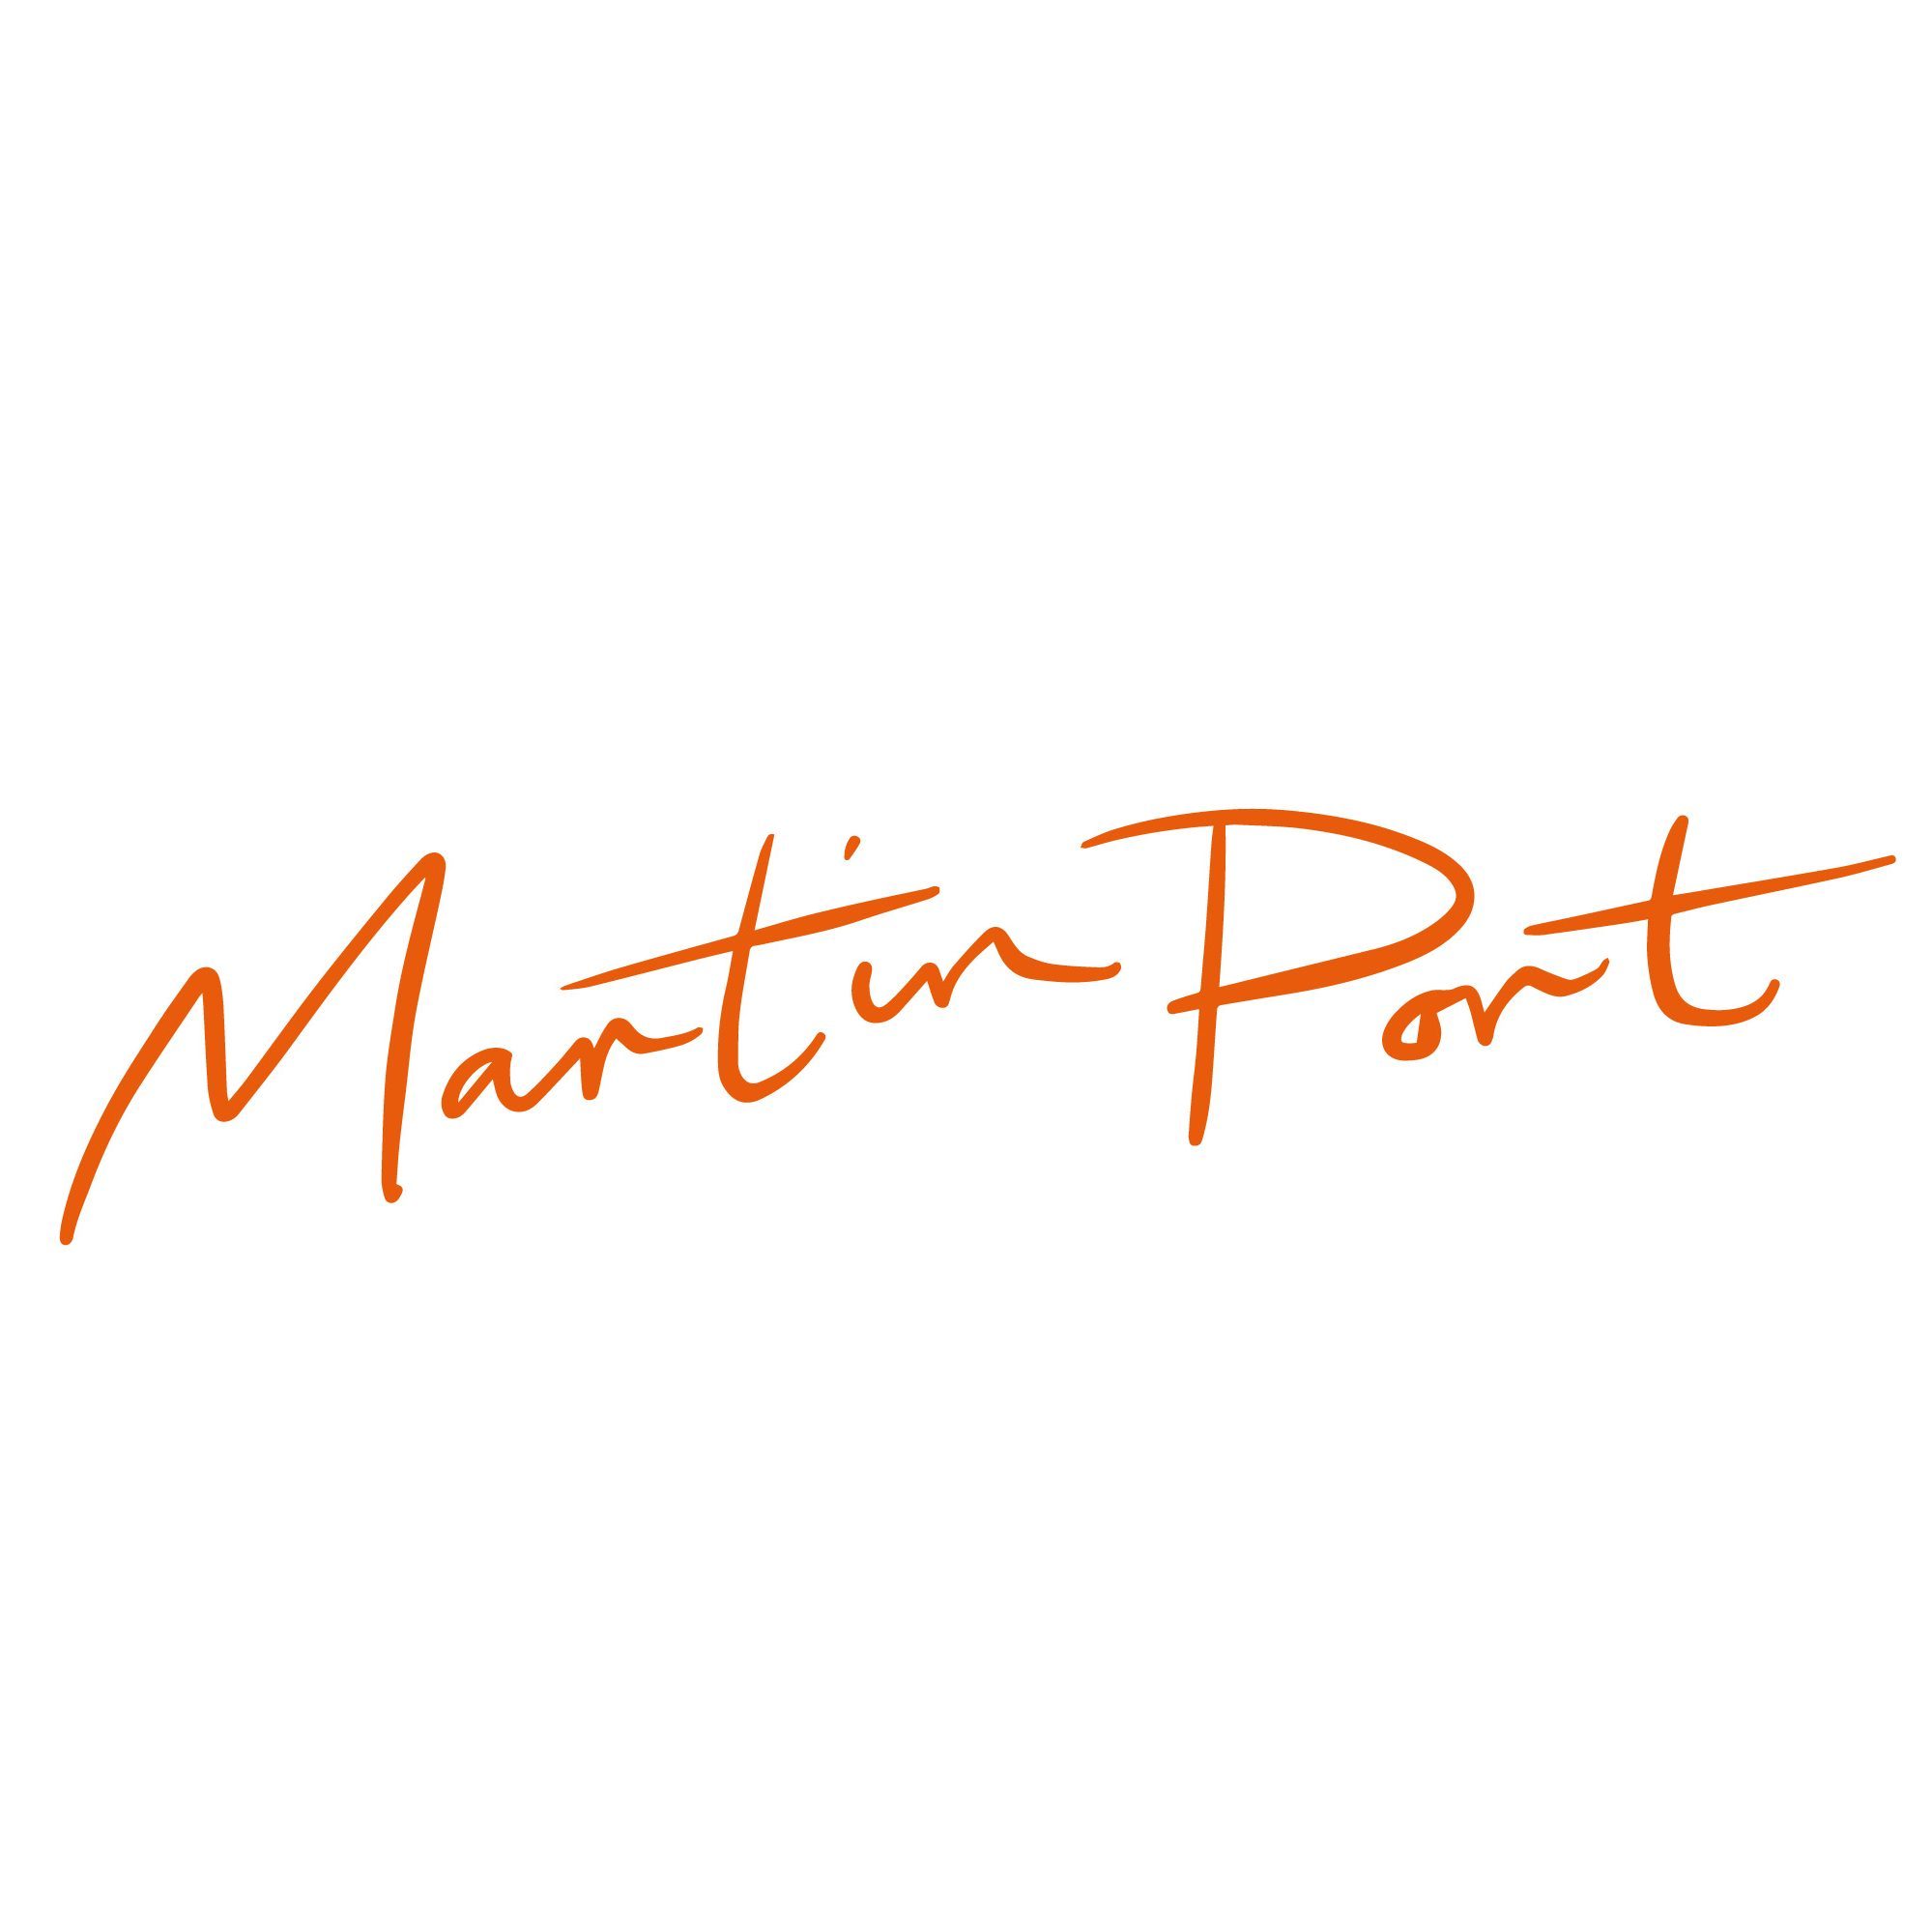 Martin Port BigChange logo